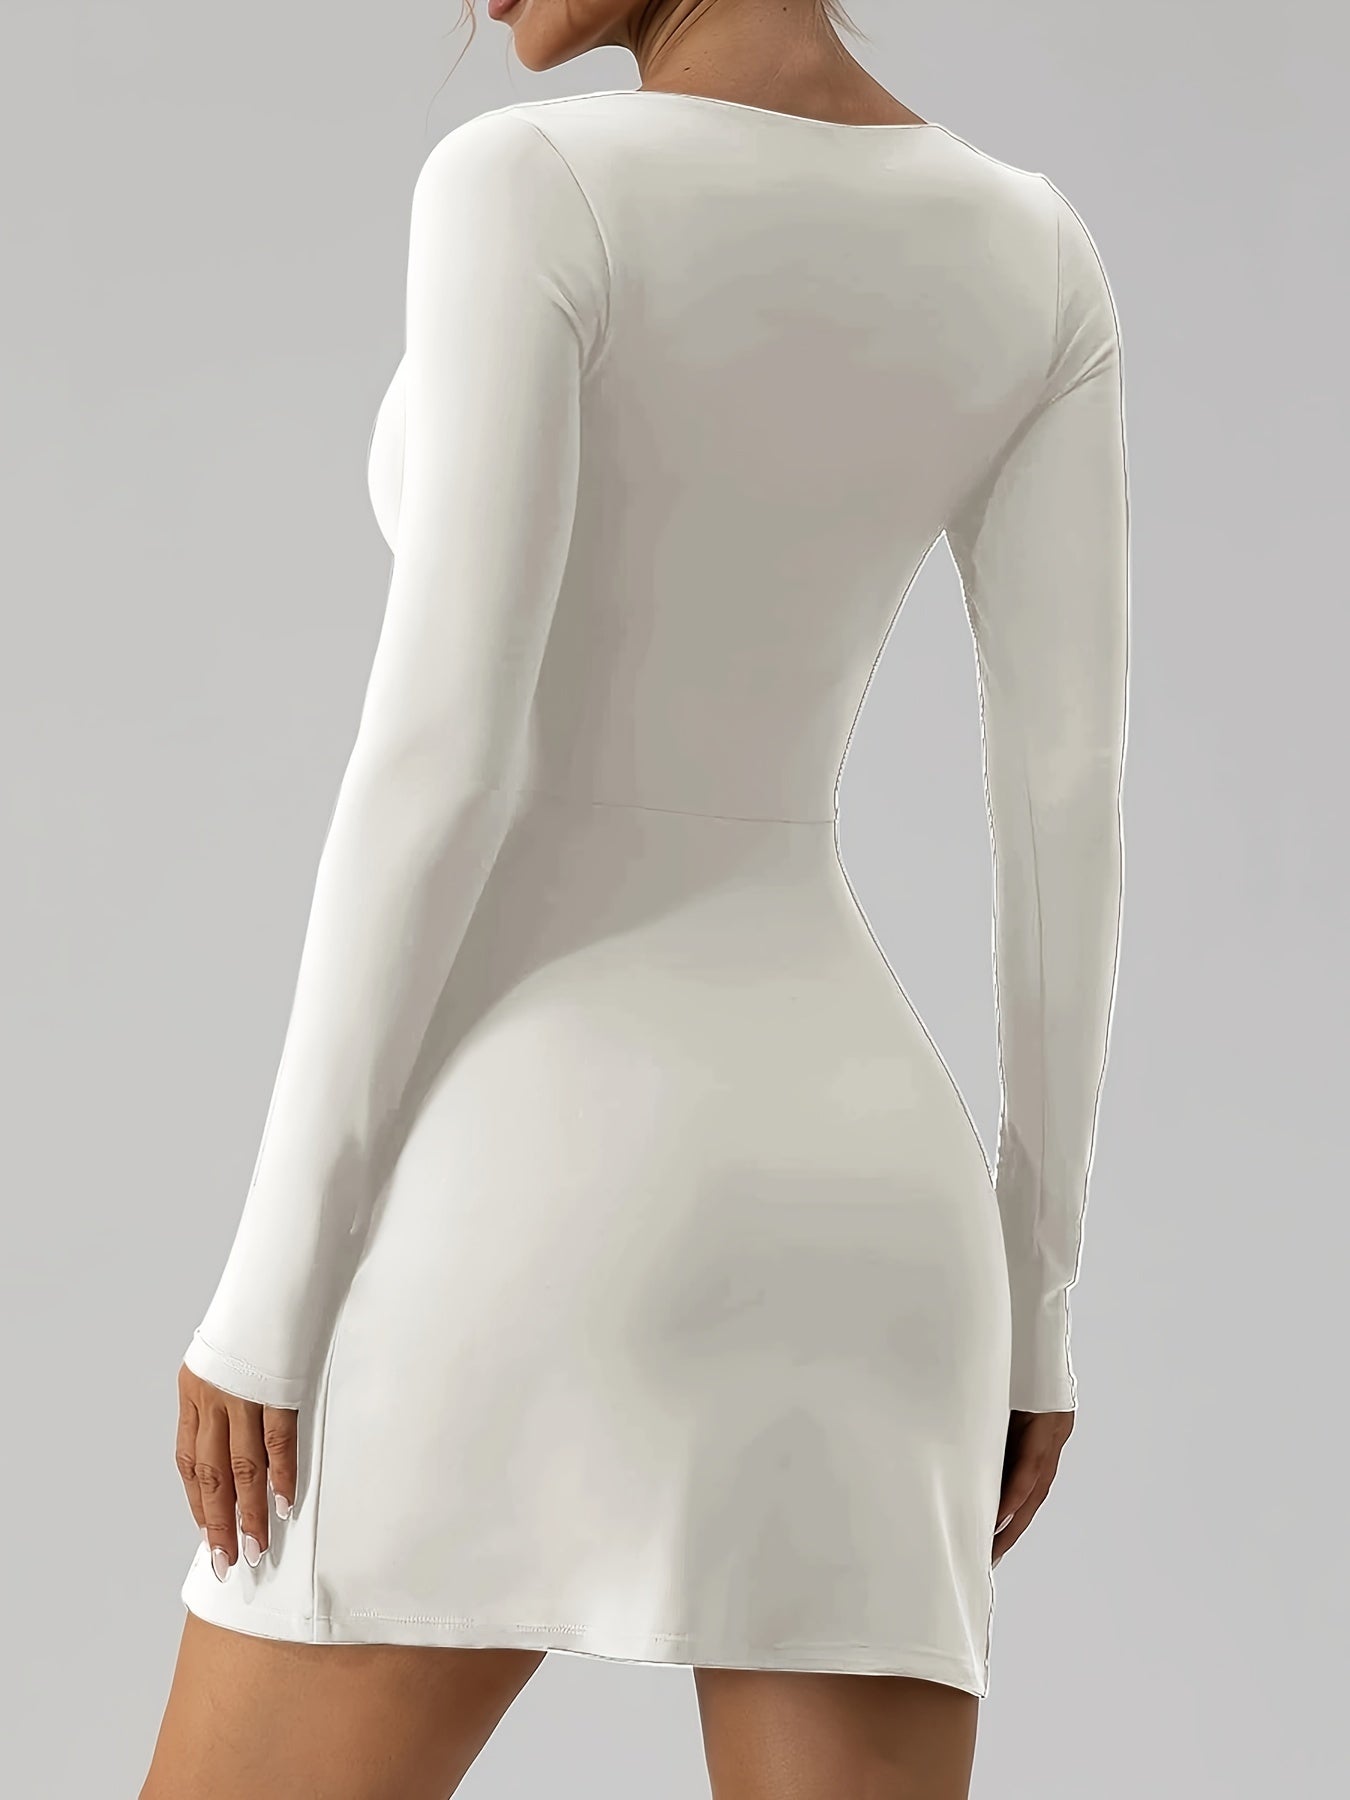 Antmvs Solid Color Long Sleeve Dress, Chic Slim Split Hem Dress For Spring & Fall, Women's Clothing